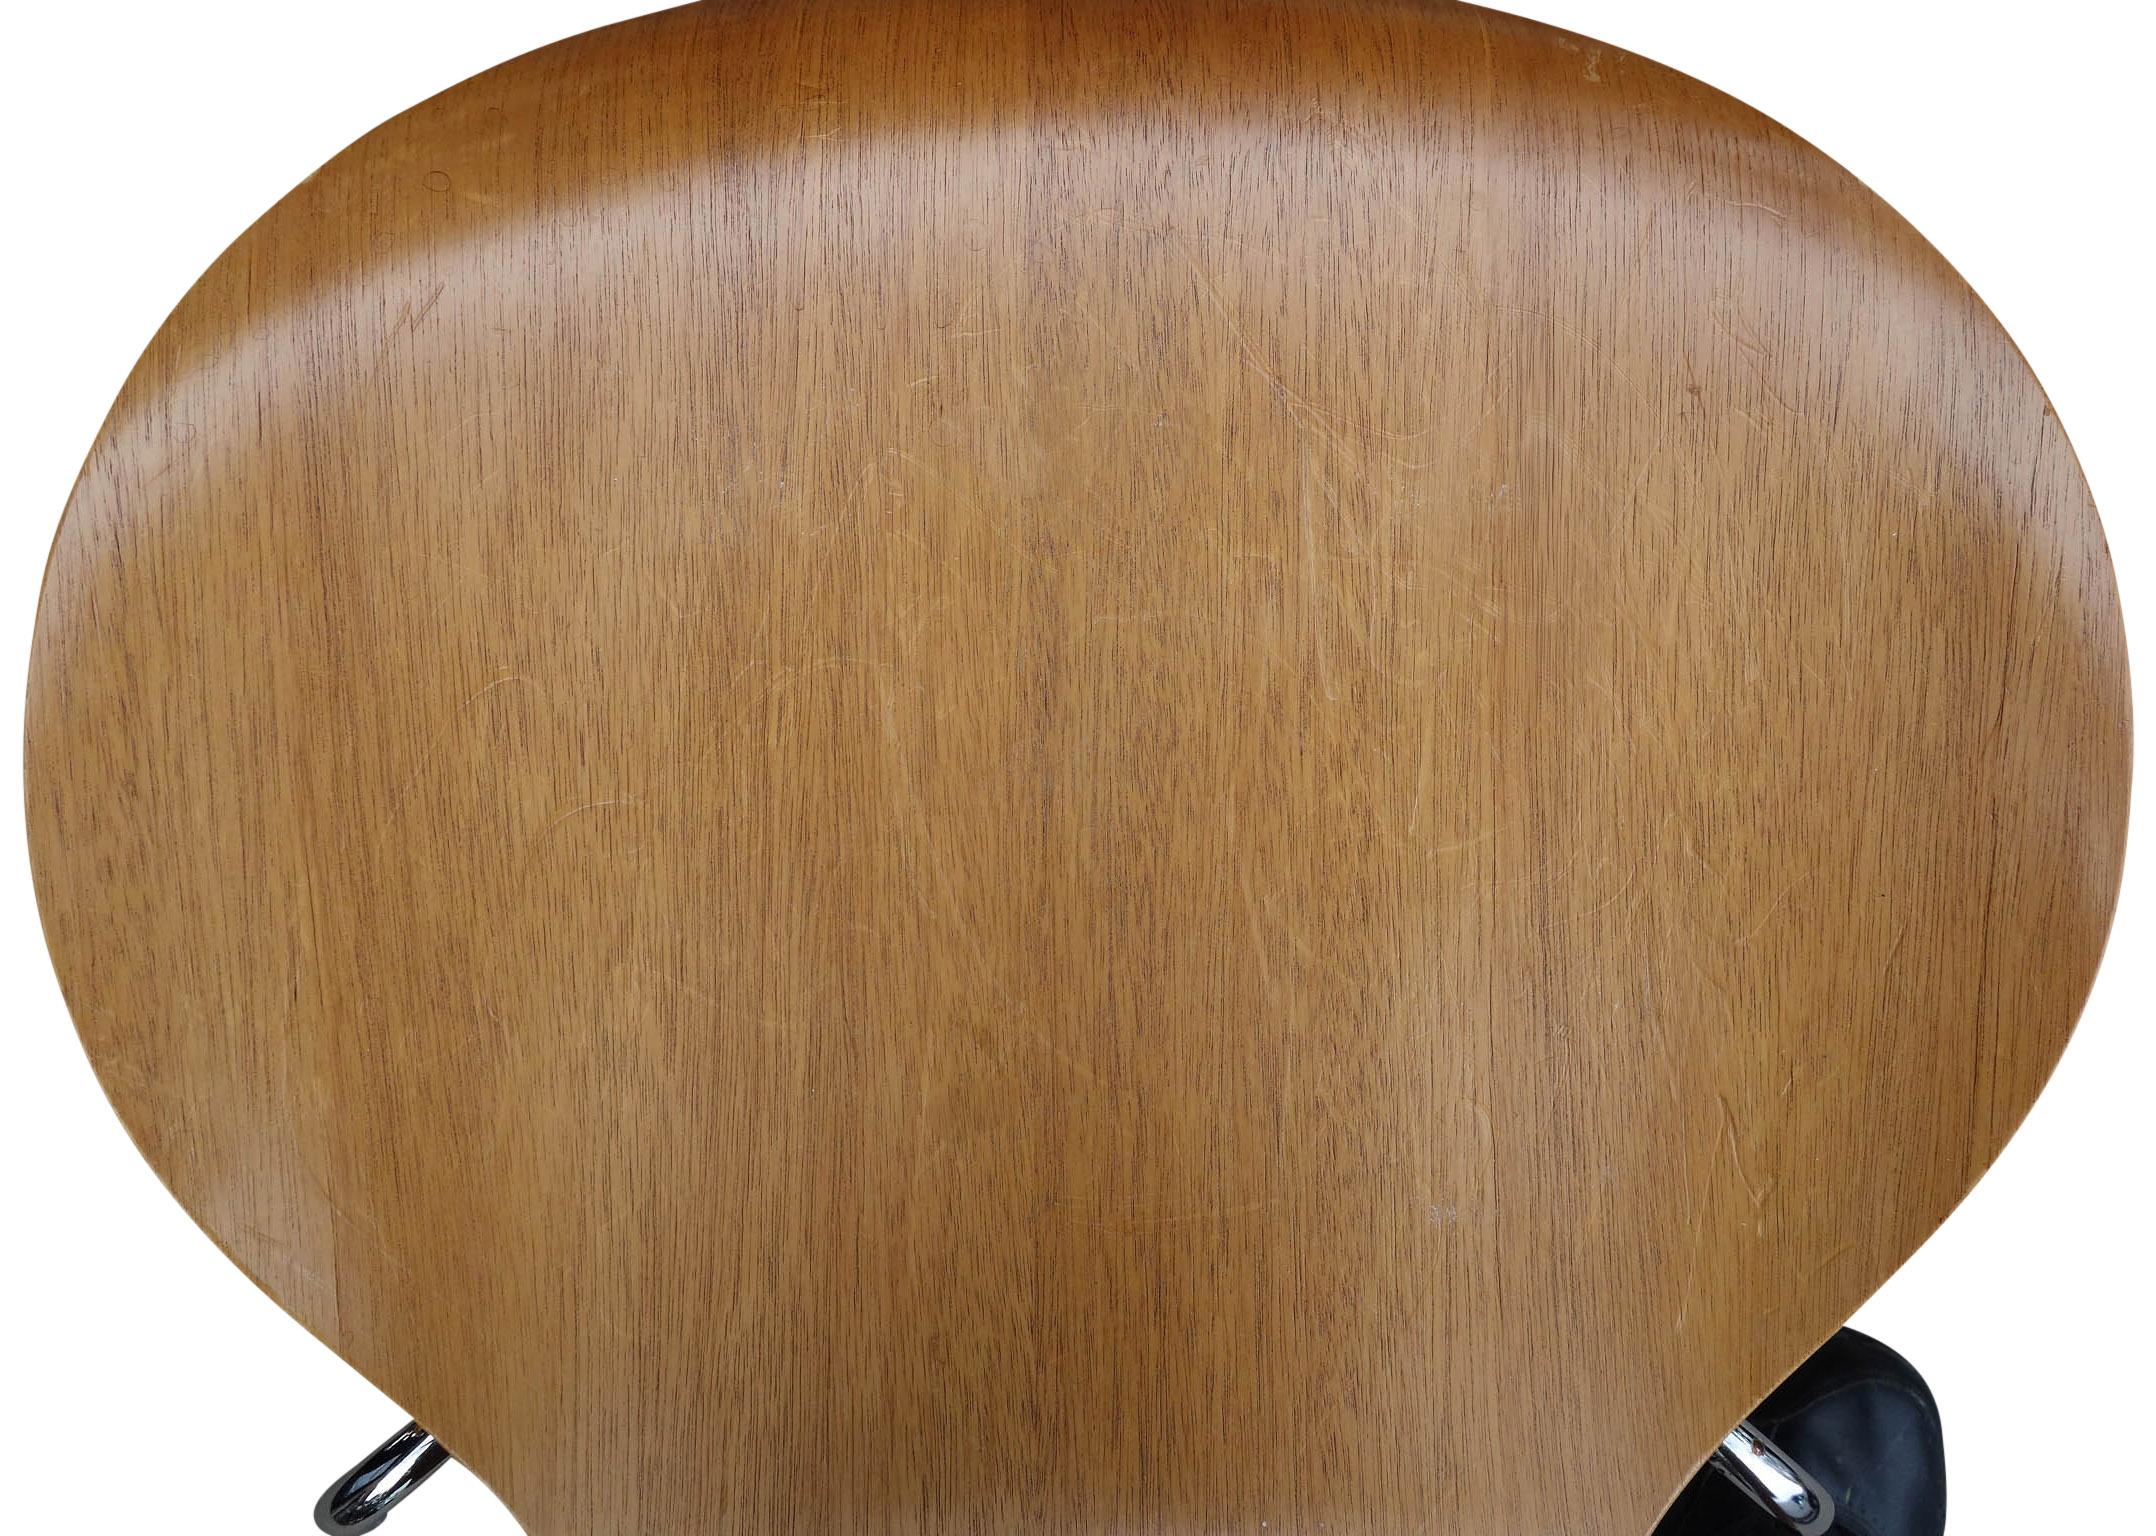 Midcentury Arne Jacobsen Series 7 Chairs 1